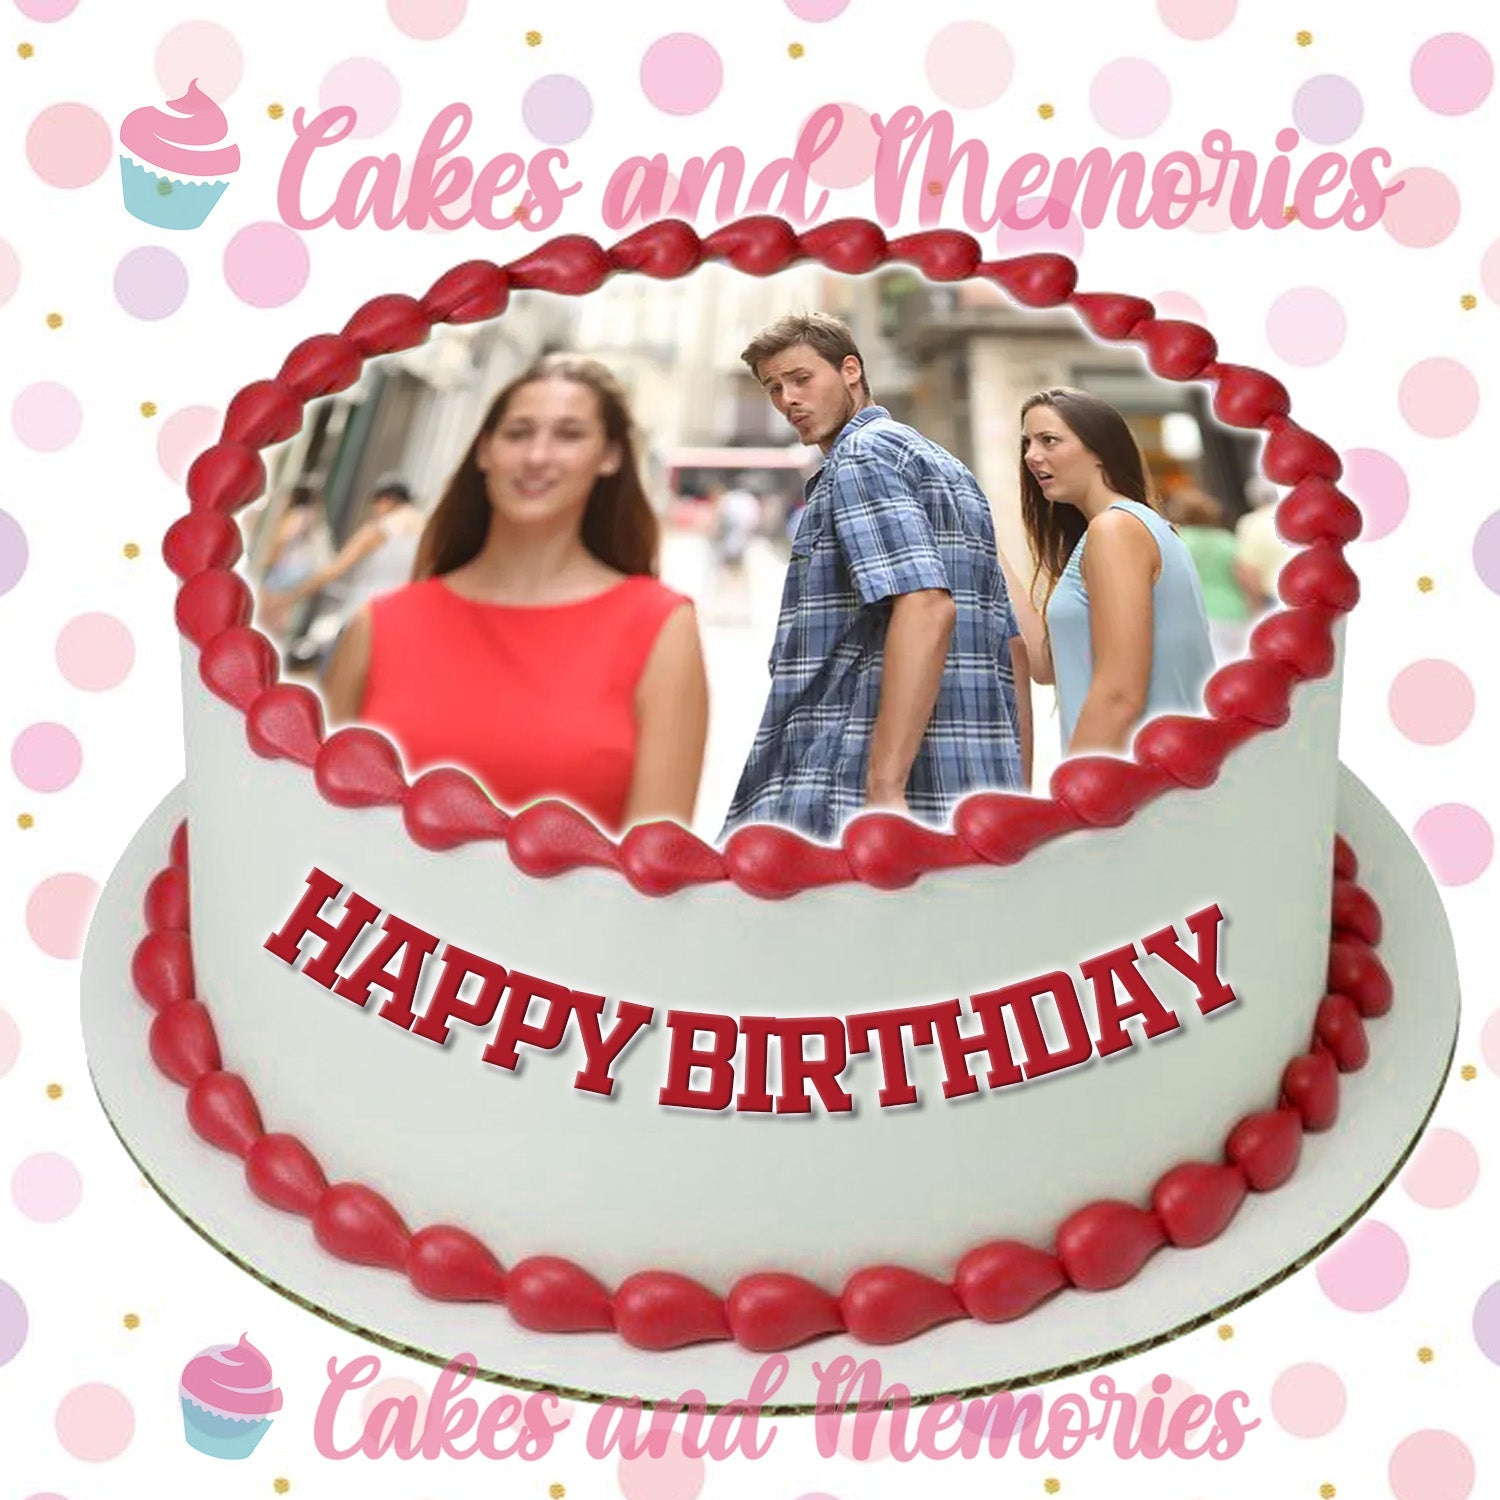 Extremely Unique Birthday Cake Ideas for Your Boyfriend | YummyCake